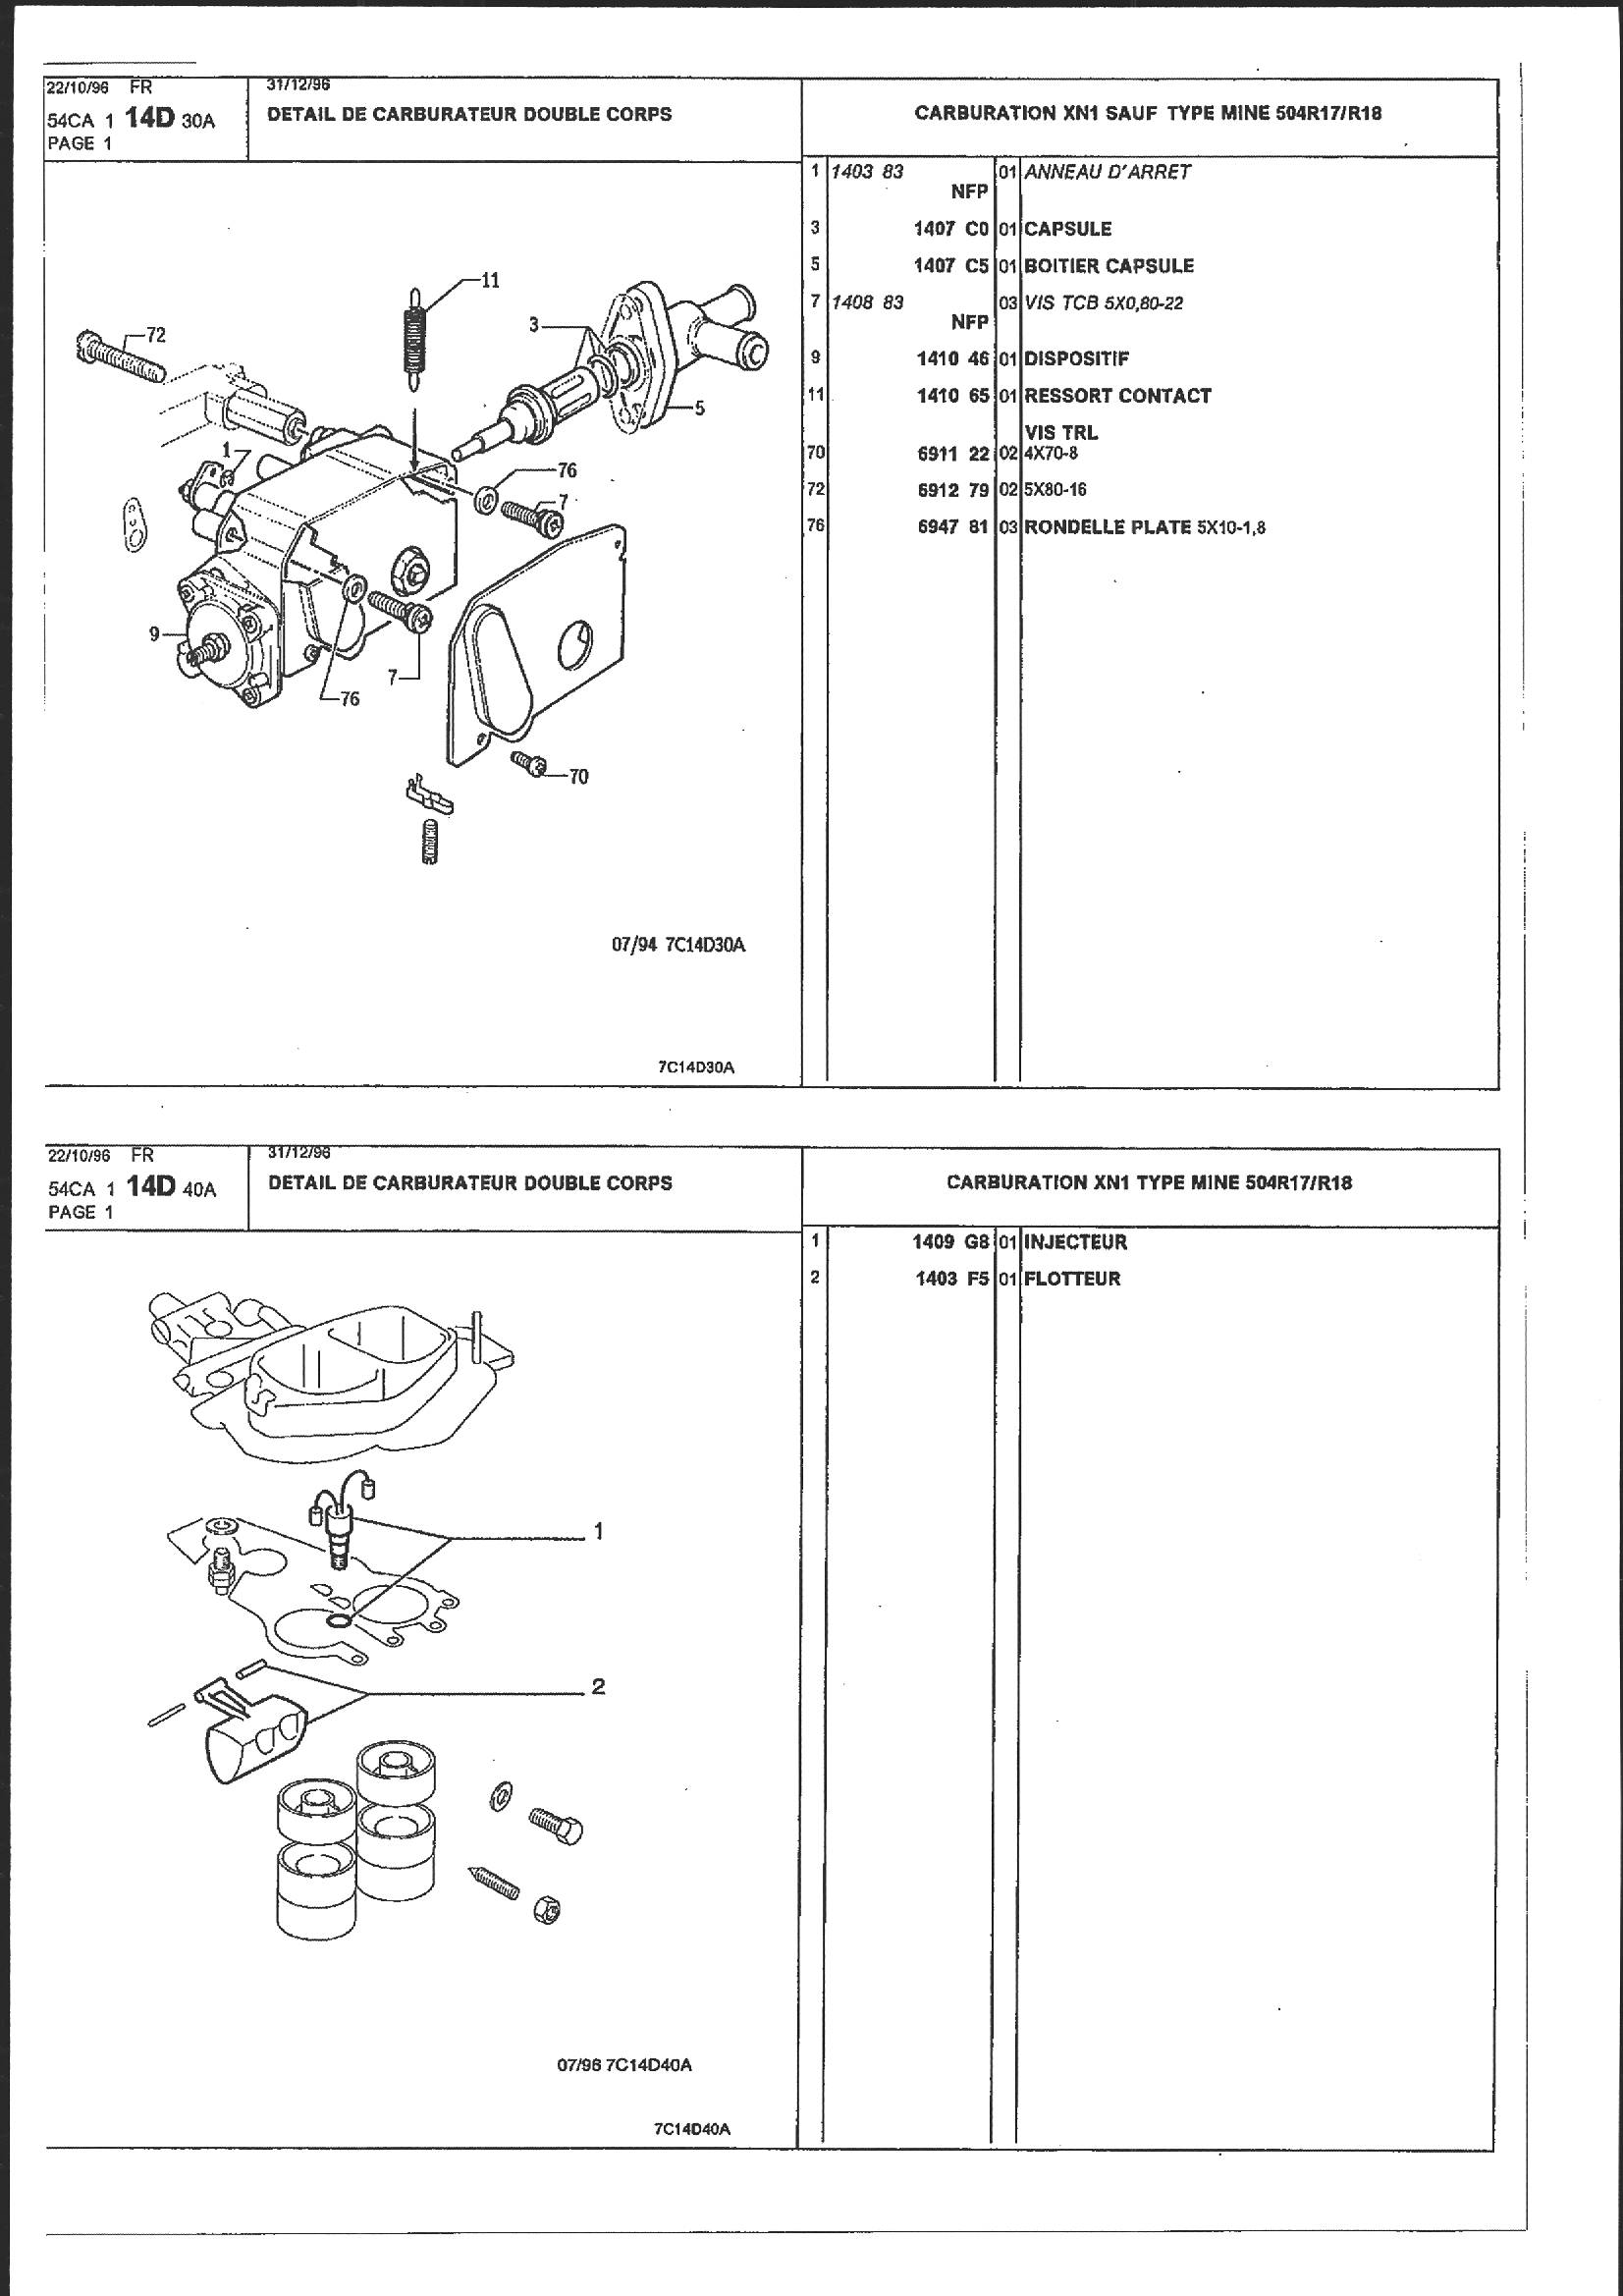 OxoxO Carburateur Joint de montage avec tournevis remplacer pour Zama C1u-h60 Ryobi Ry29550 Ry30530 Ry30550 Ry30570 Ry30931 Ry30951 Ry30971 Homelite Ut32600 Ut32650 